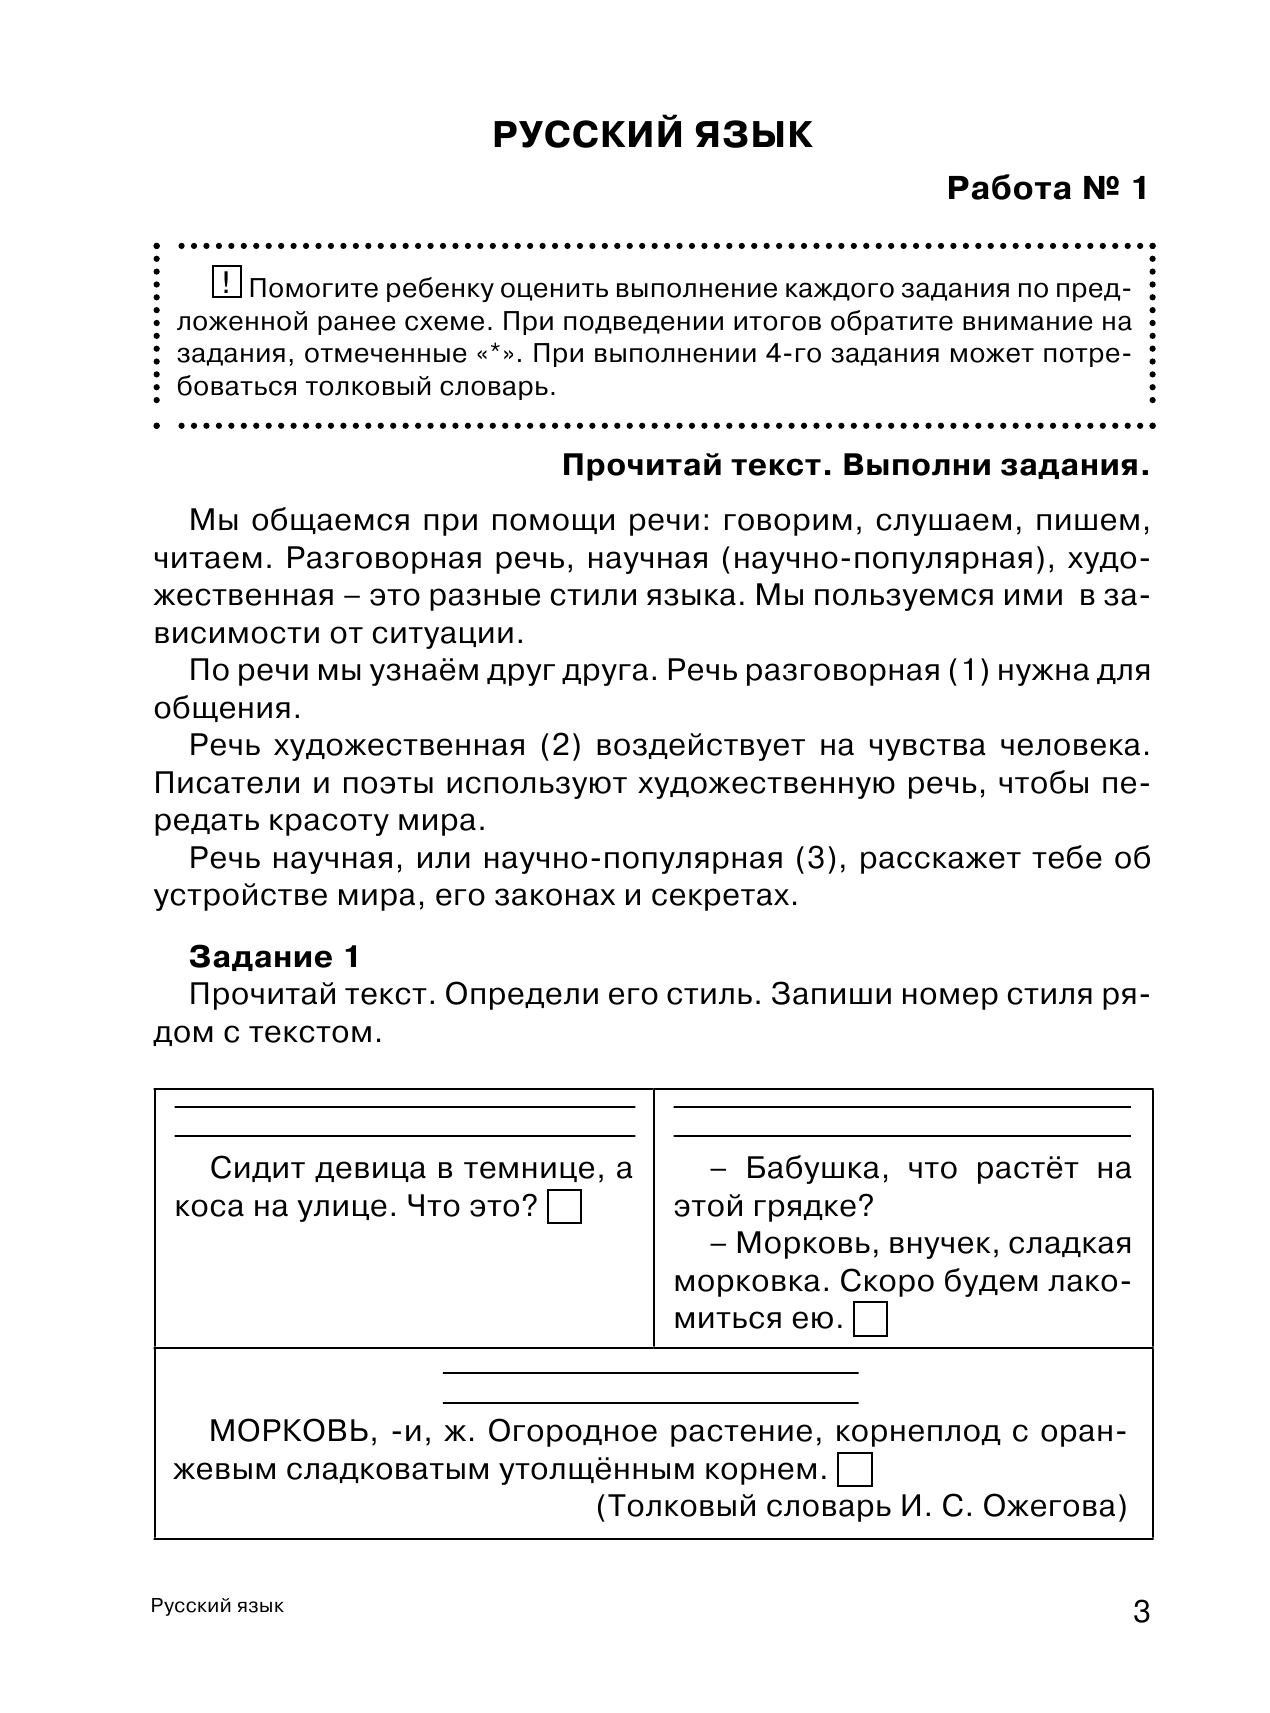 Каменкова Н. В., Полякова Е. Д. Работа с текстом и информацией. 2 класс - страница 3